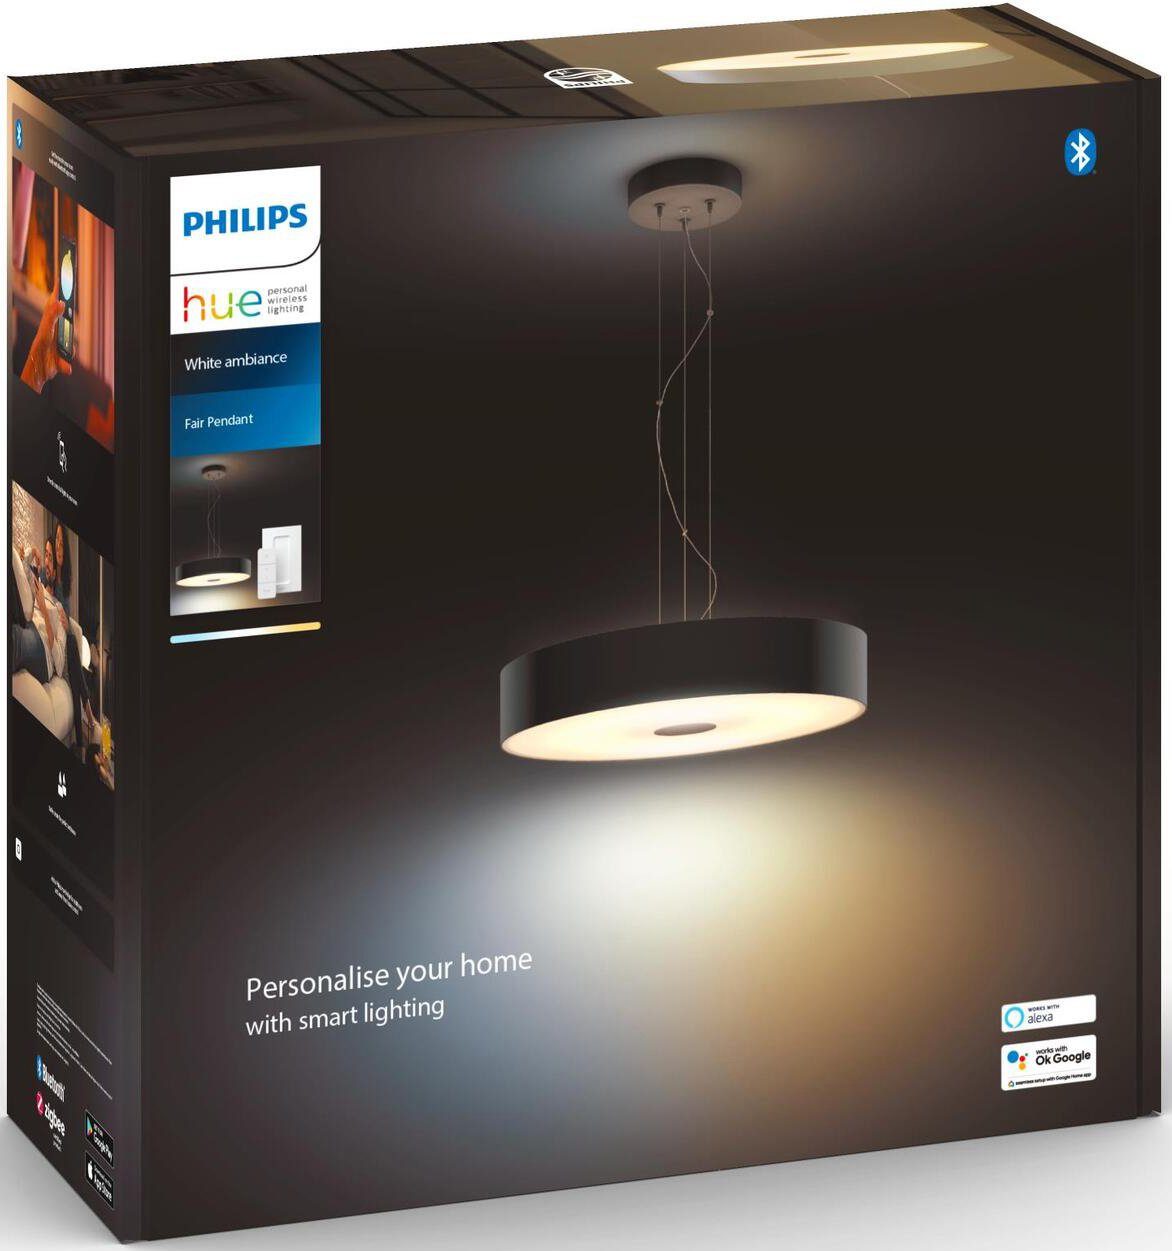 Philips Pendelleuchte LED fest Warmweiß Fair, Dimmfunktion, integriert, Hue LED